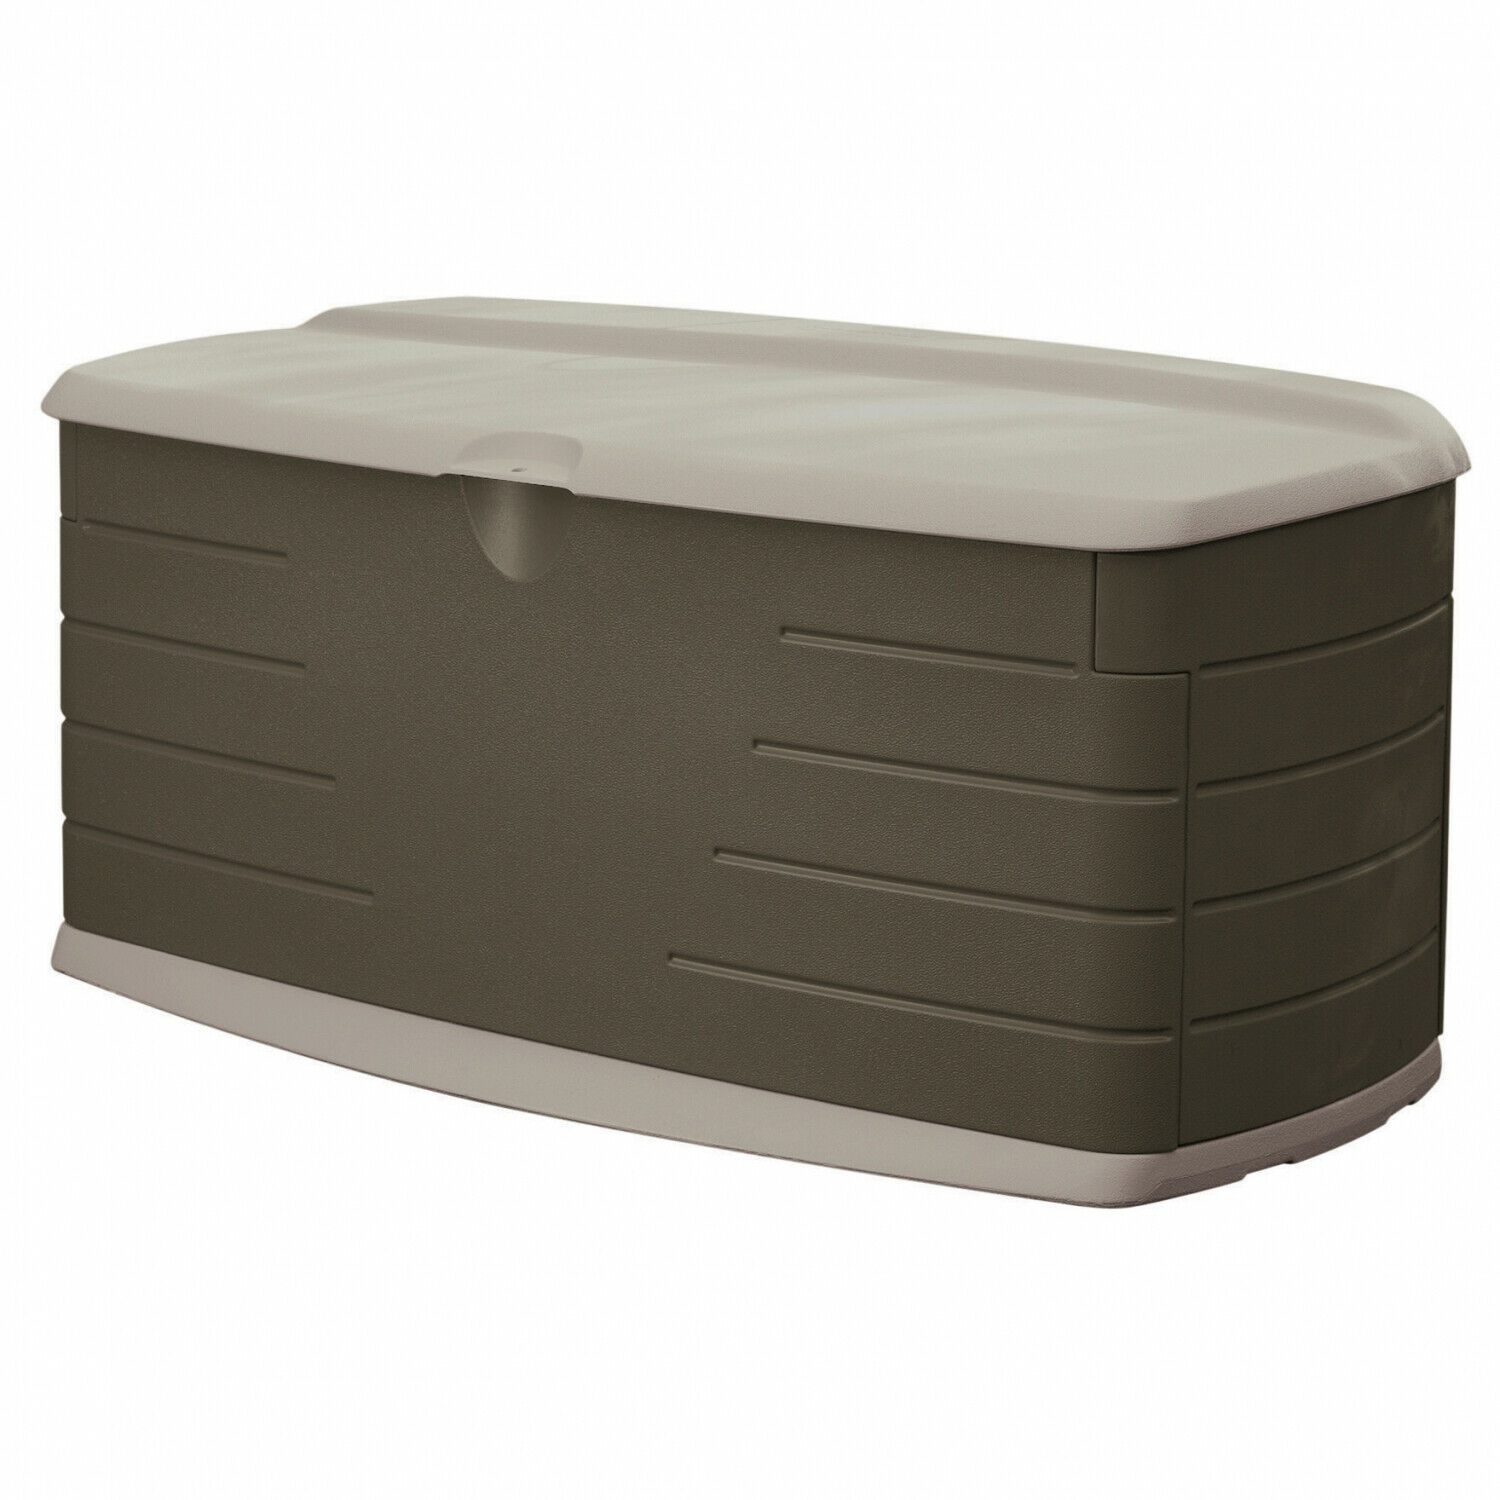 Large Deck Box W/ Seat 90-Gal Capacity Storage Outdoor Patio Plastic Bench Bin